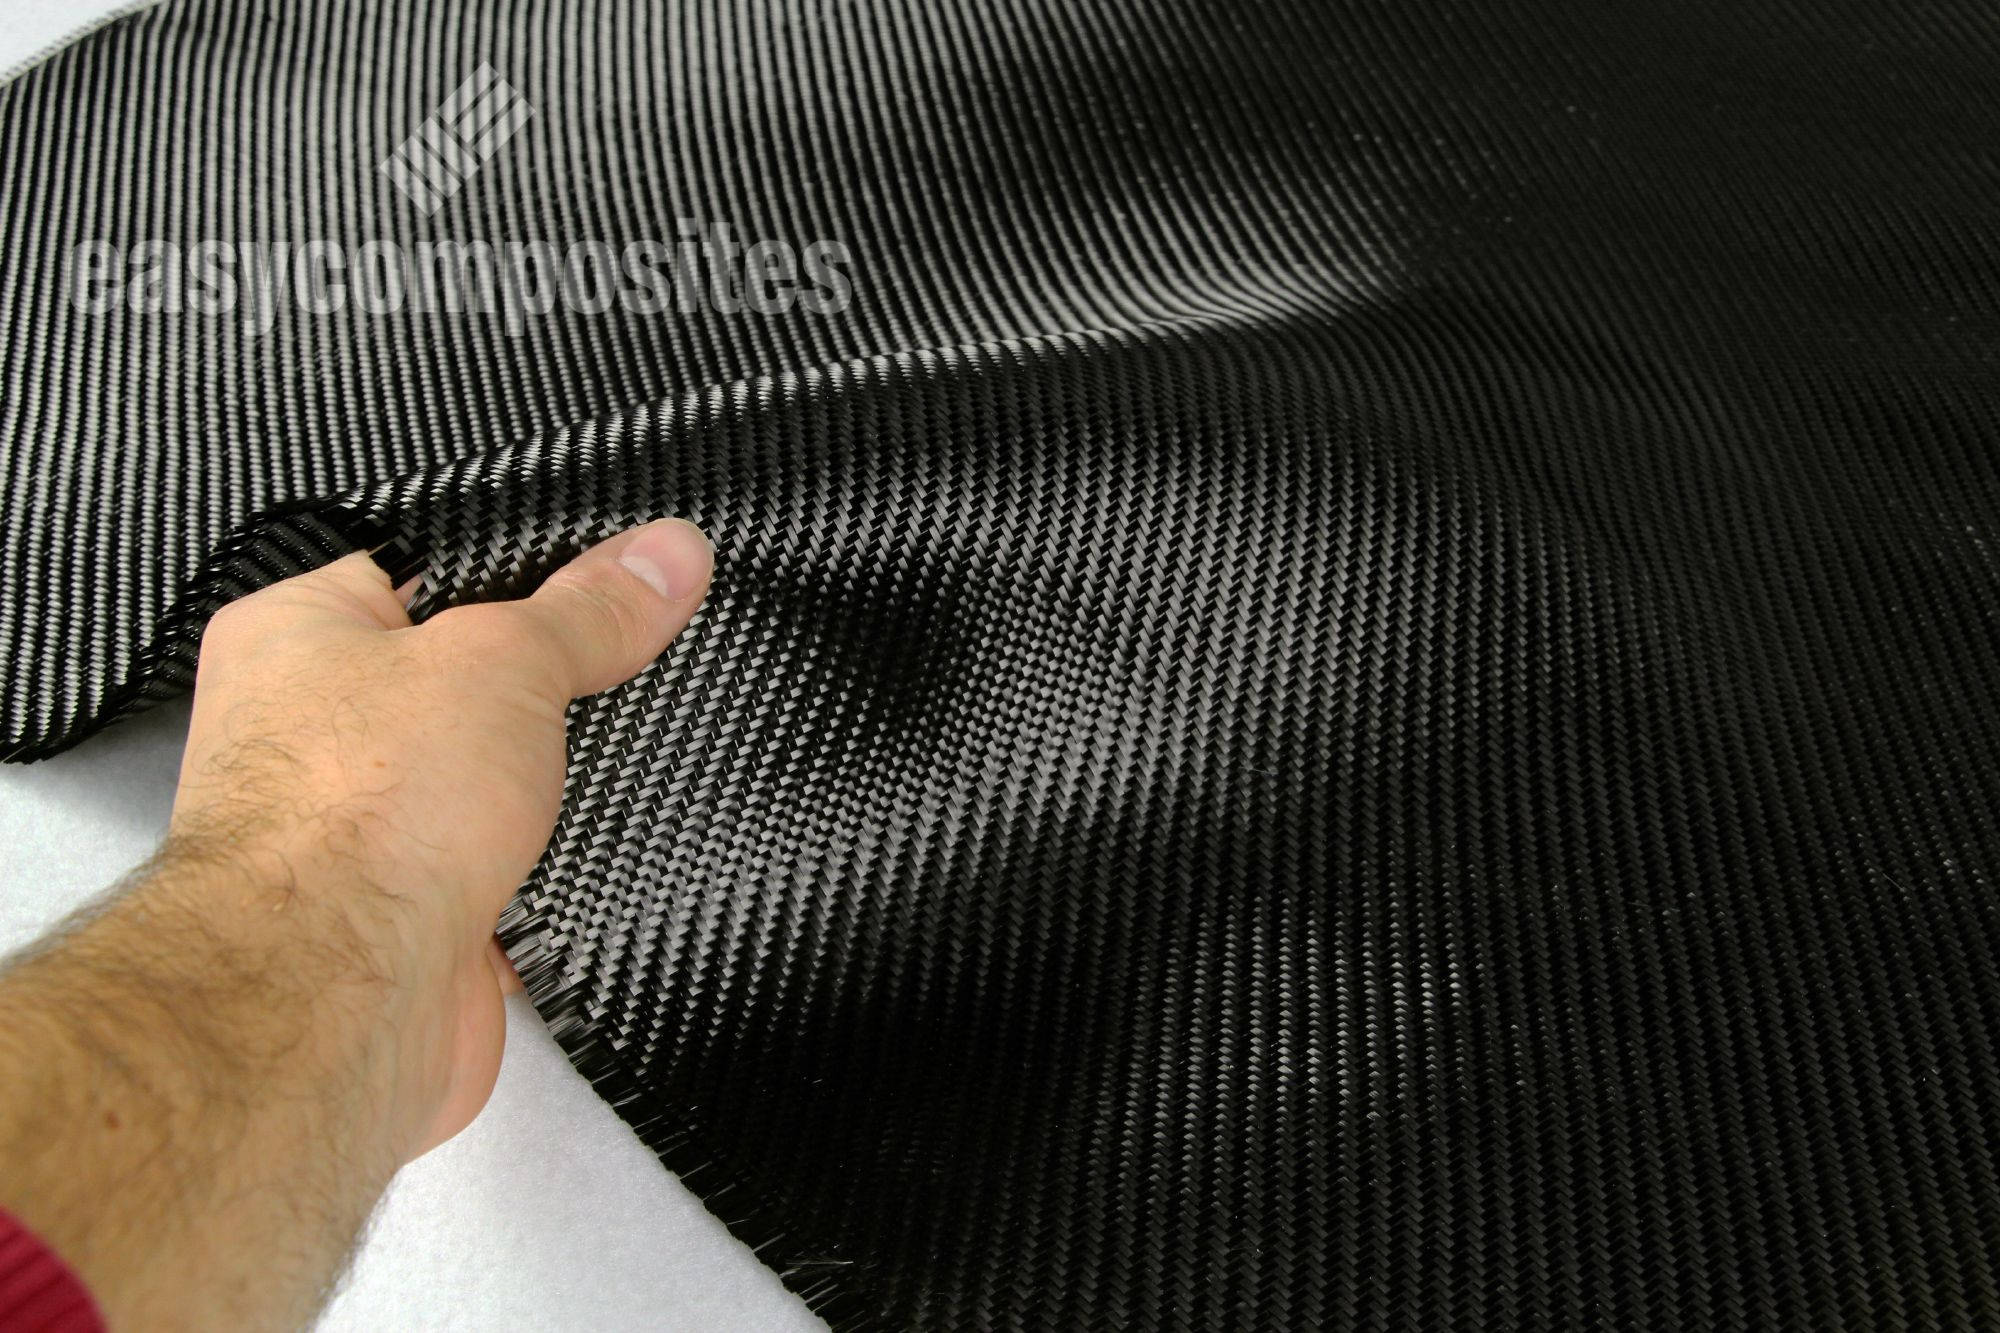 Carbon fiber twill cloth - 1000mm wide